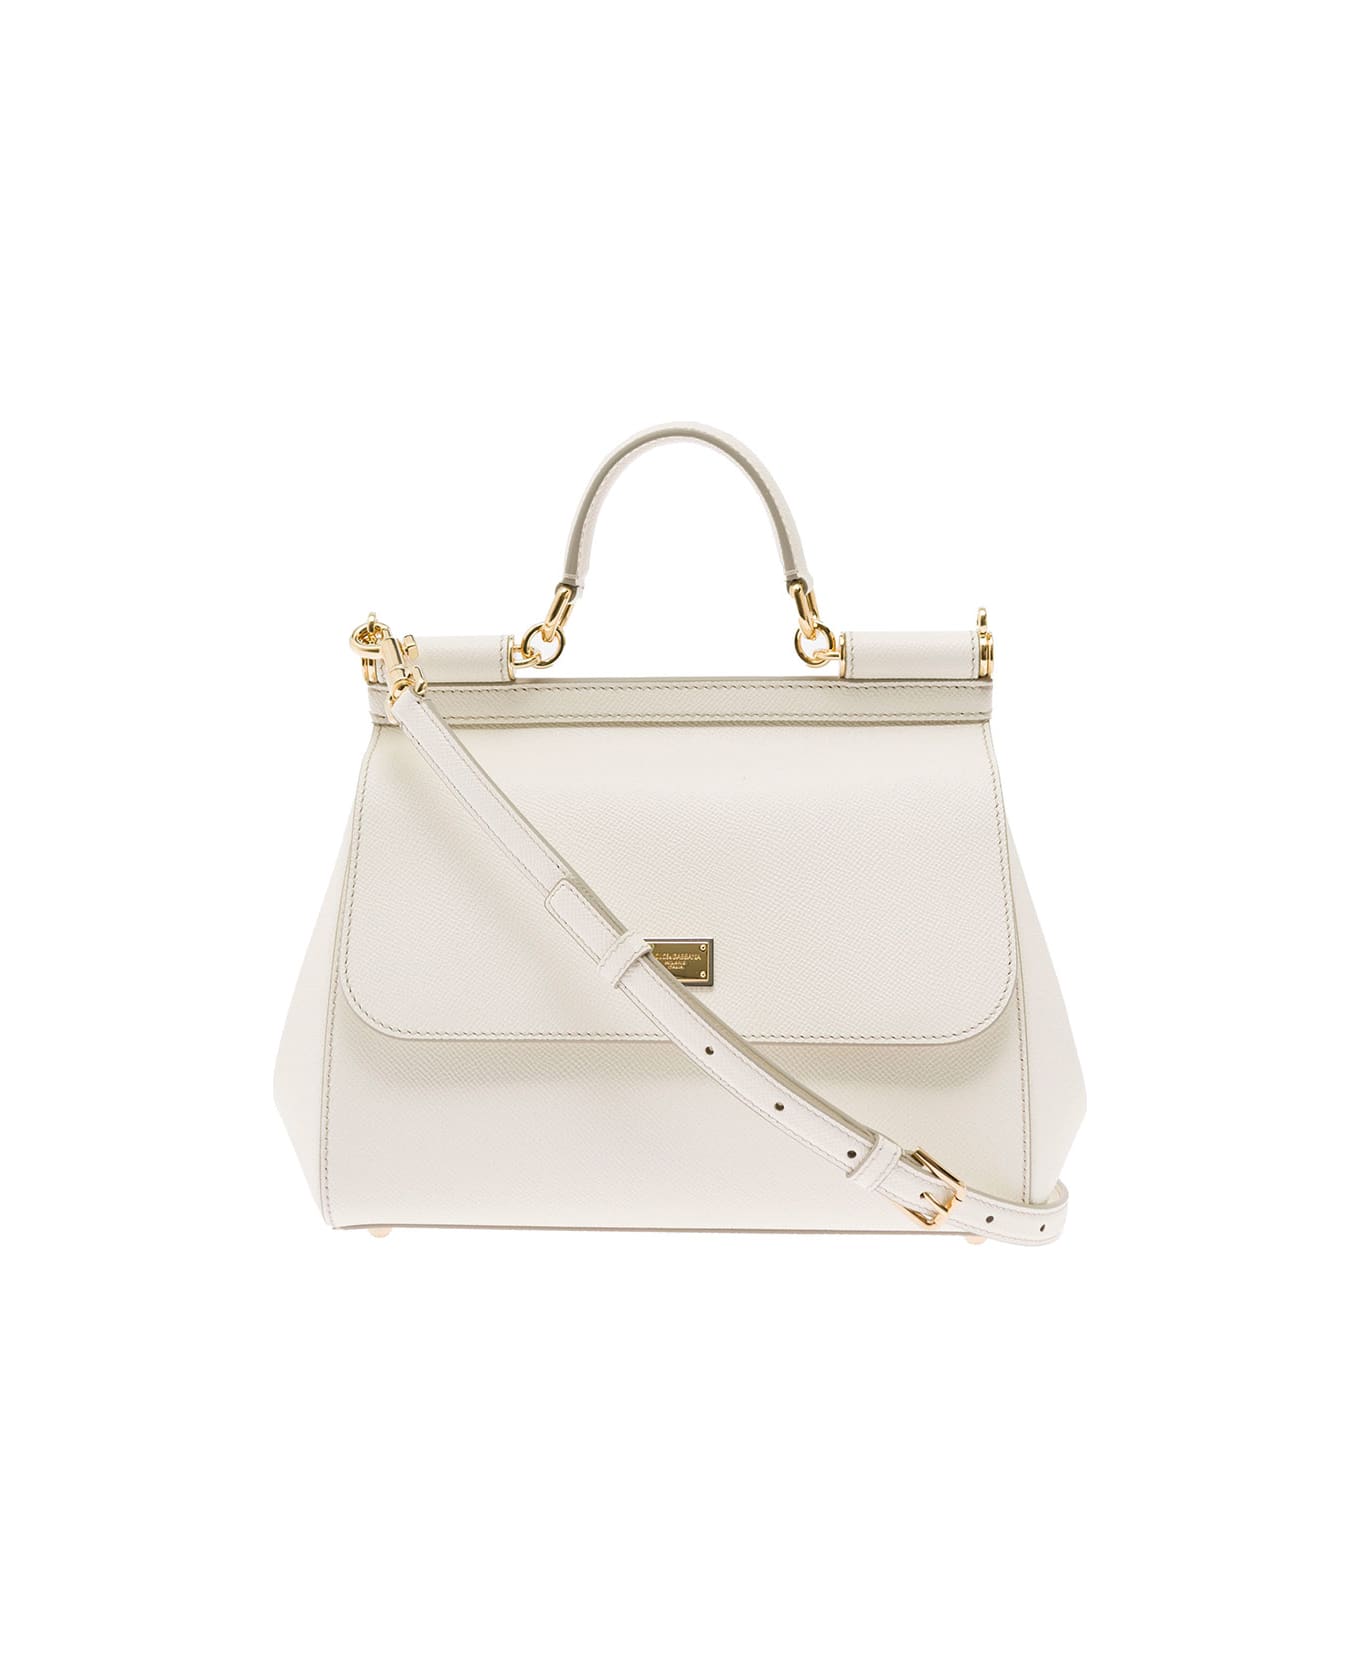 Dolce & Gabbana White Sicily Medium White Handbag In Grained Leather Dolce & Gabbana Woman - White